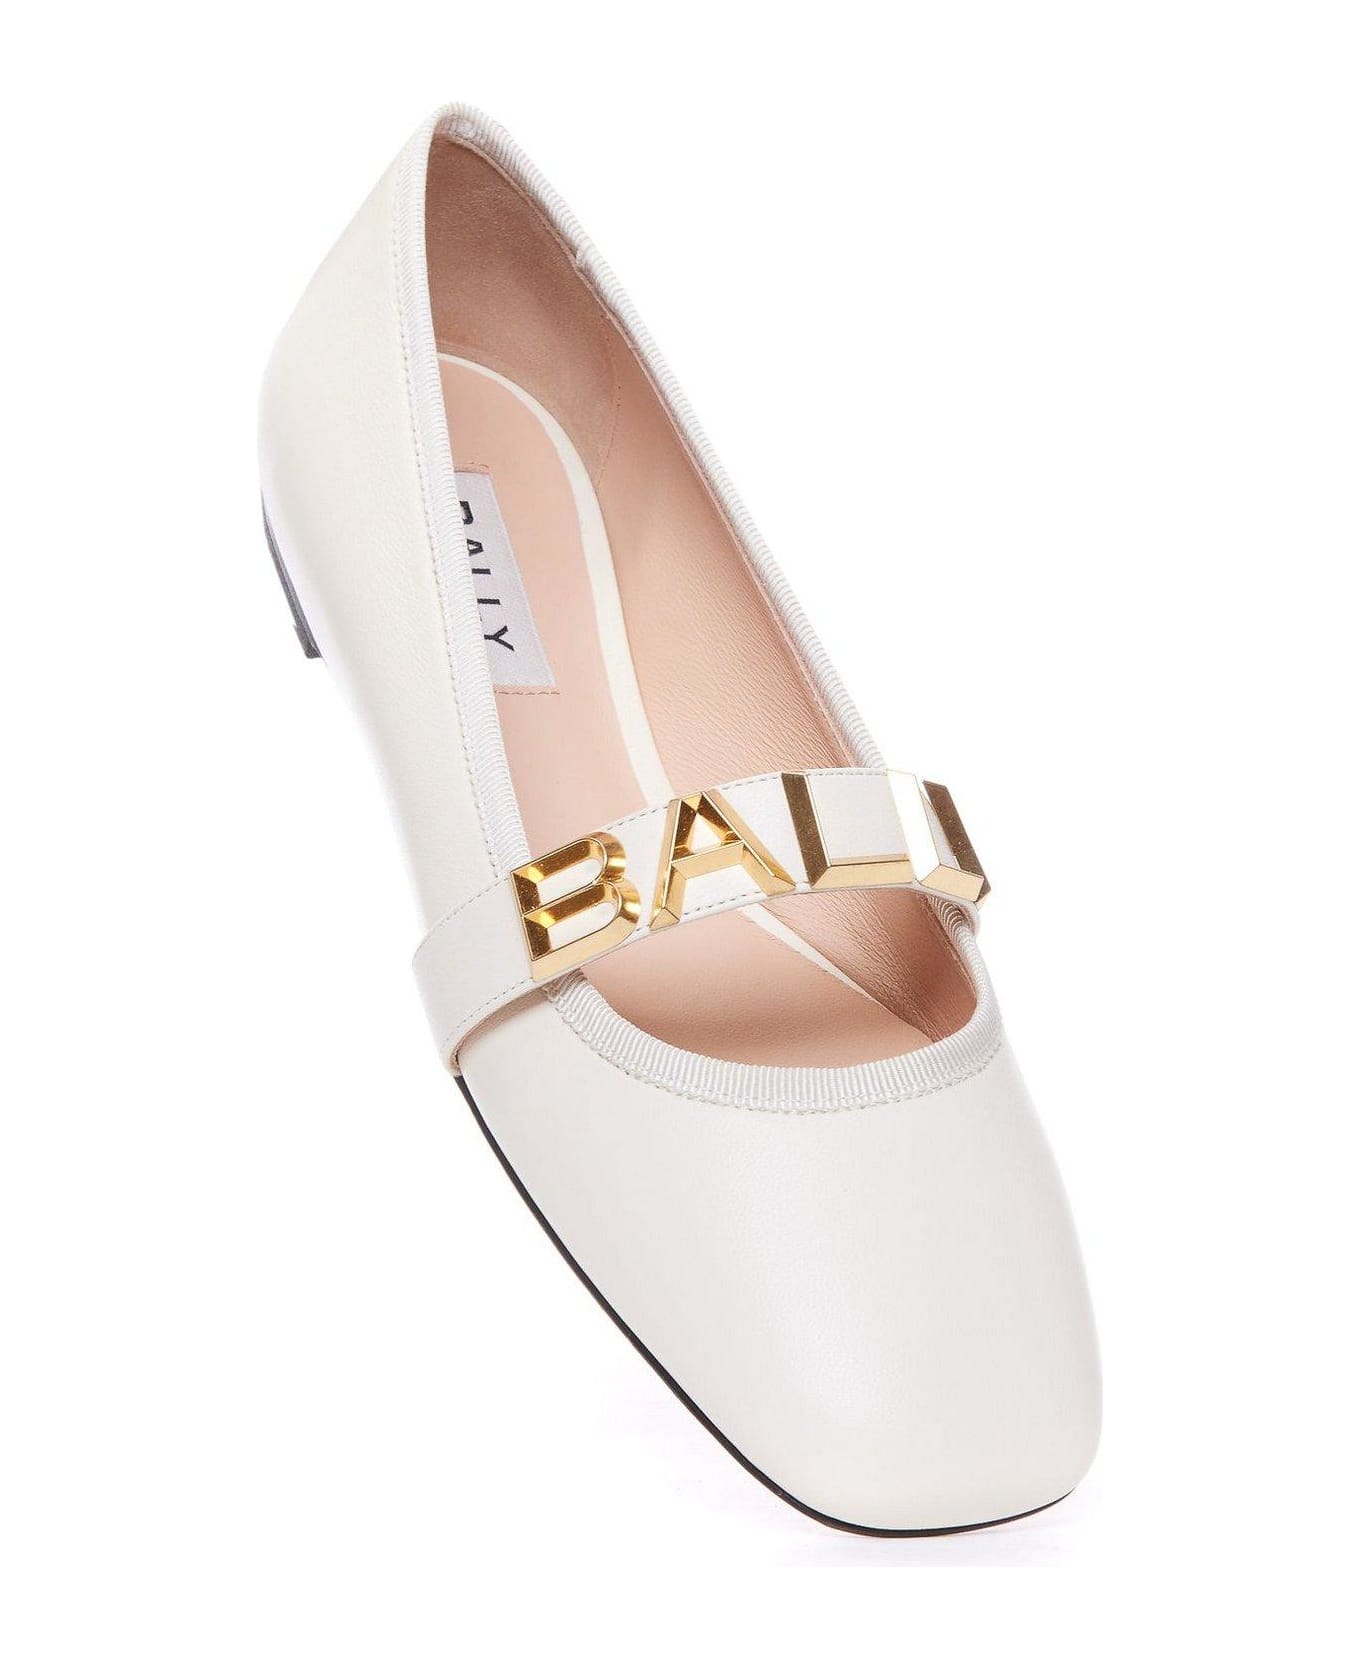 Bally Balby Squared Toe Ballet Flats - Cream フラットシューズ